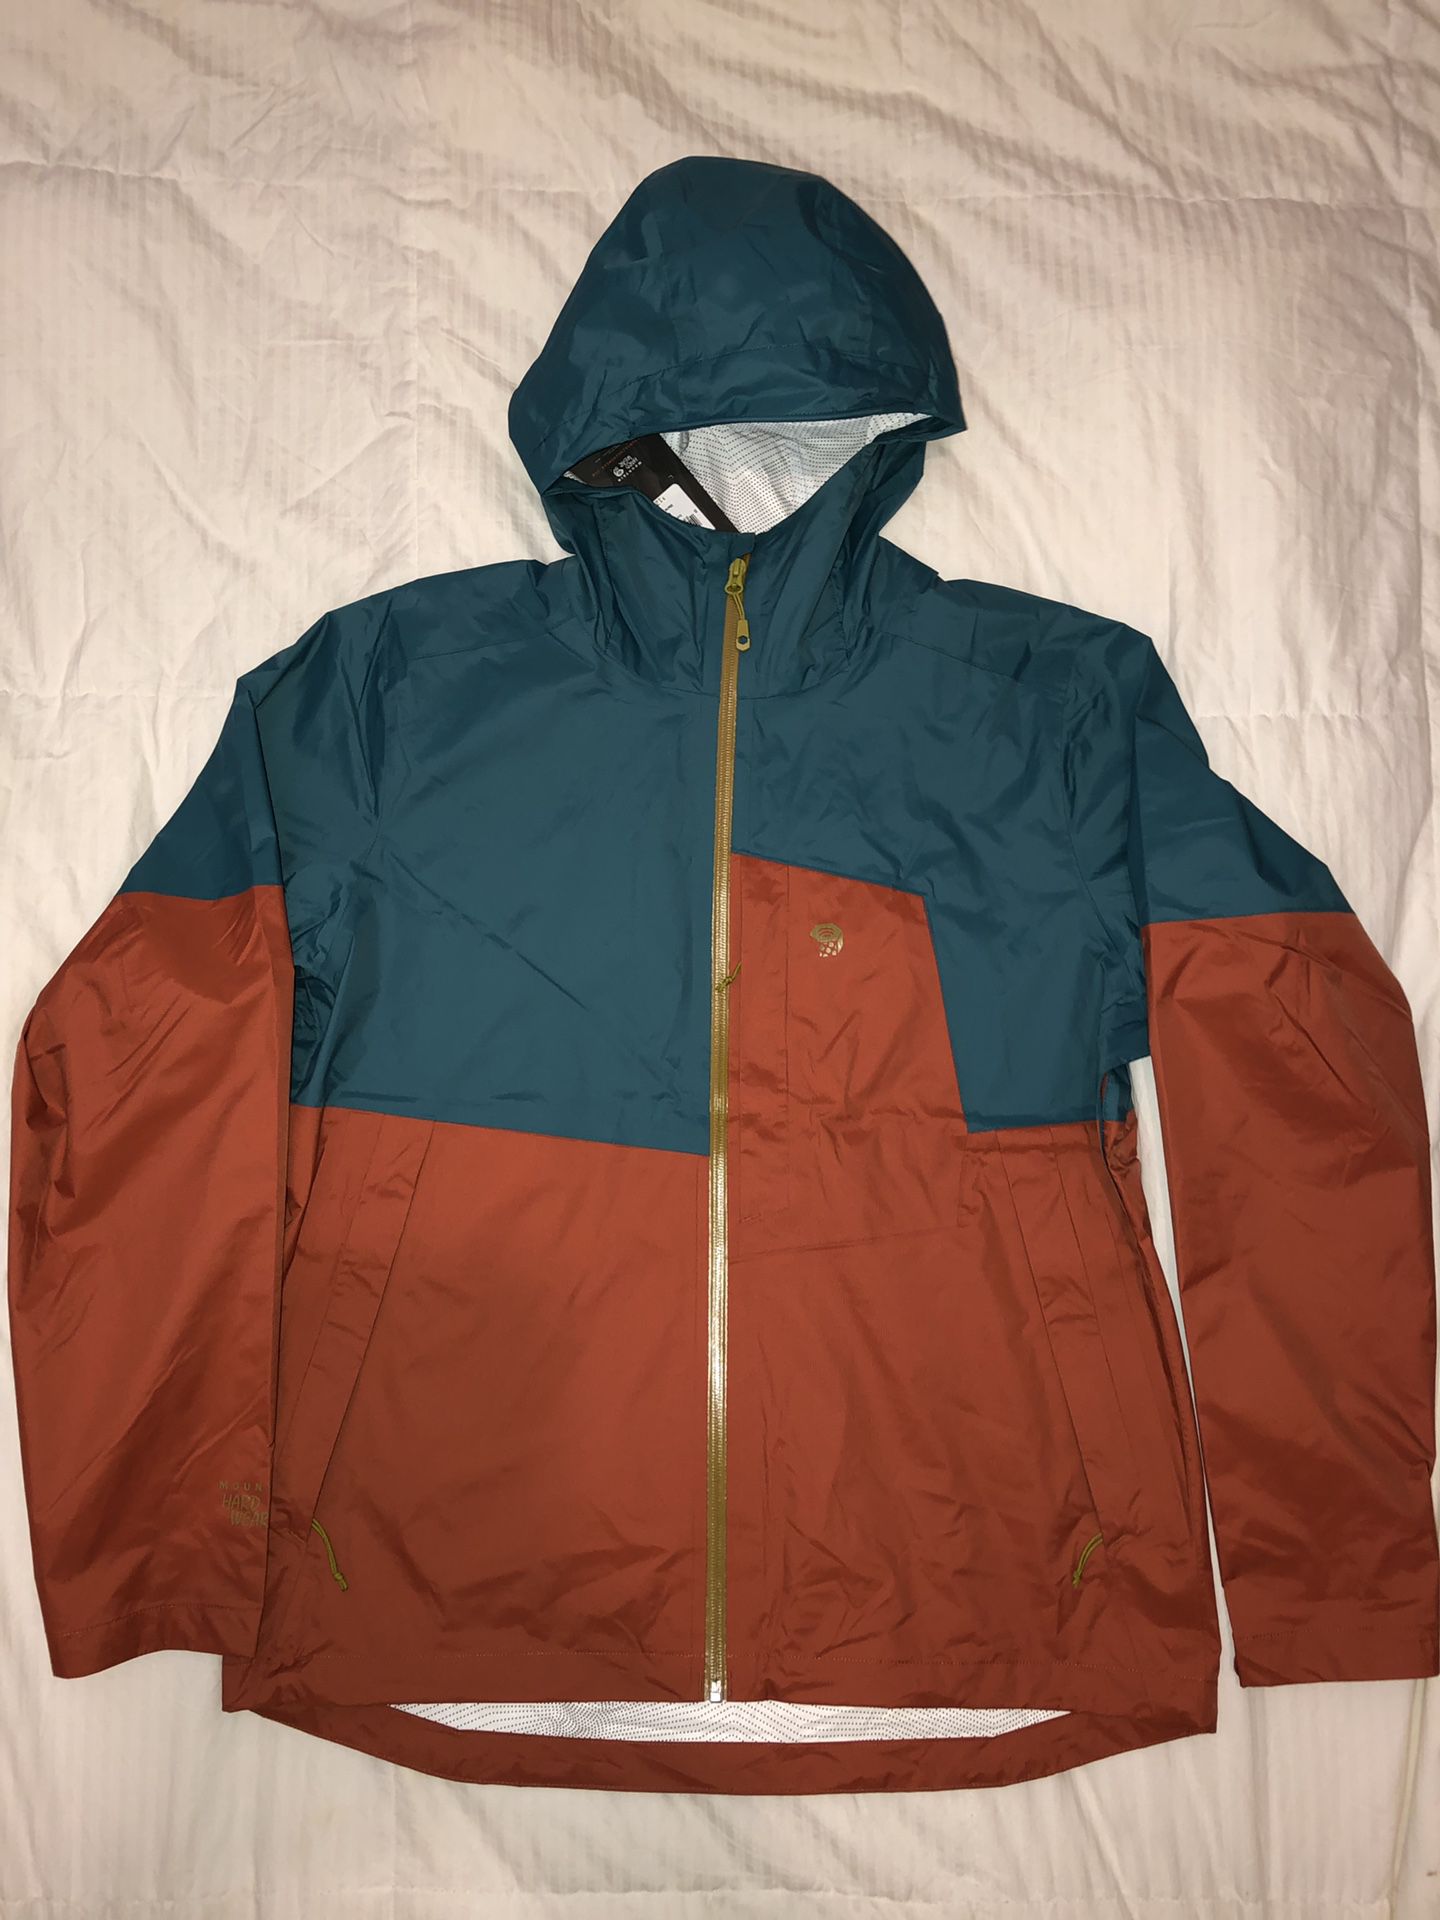 NEW Mountain Hardwear Exponent 2 Waterproof Rain Jacket Men’s Large